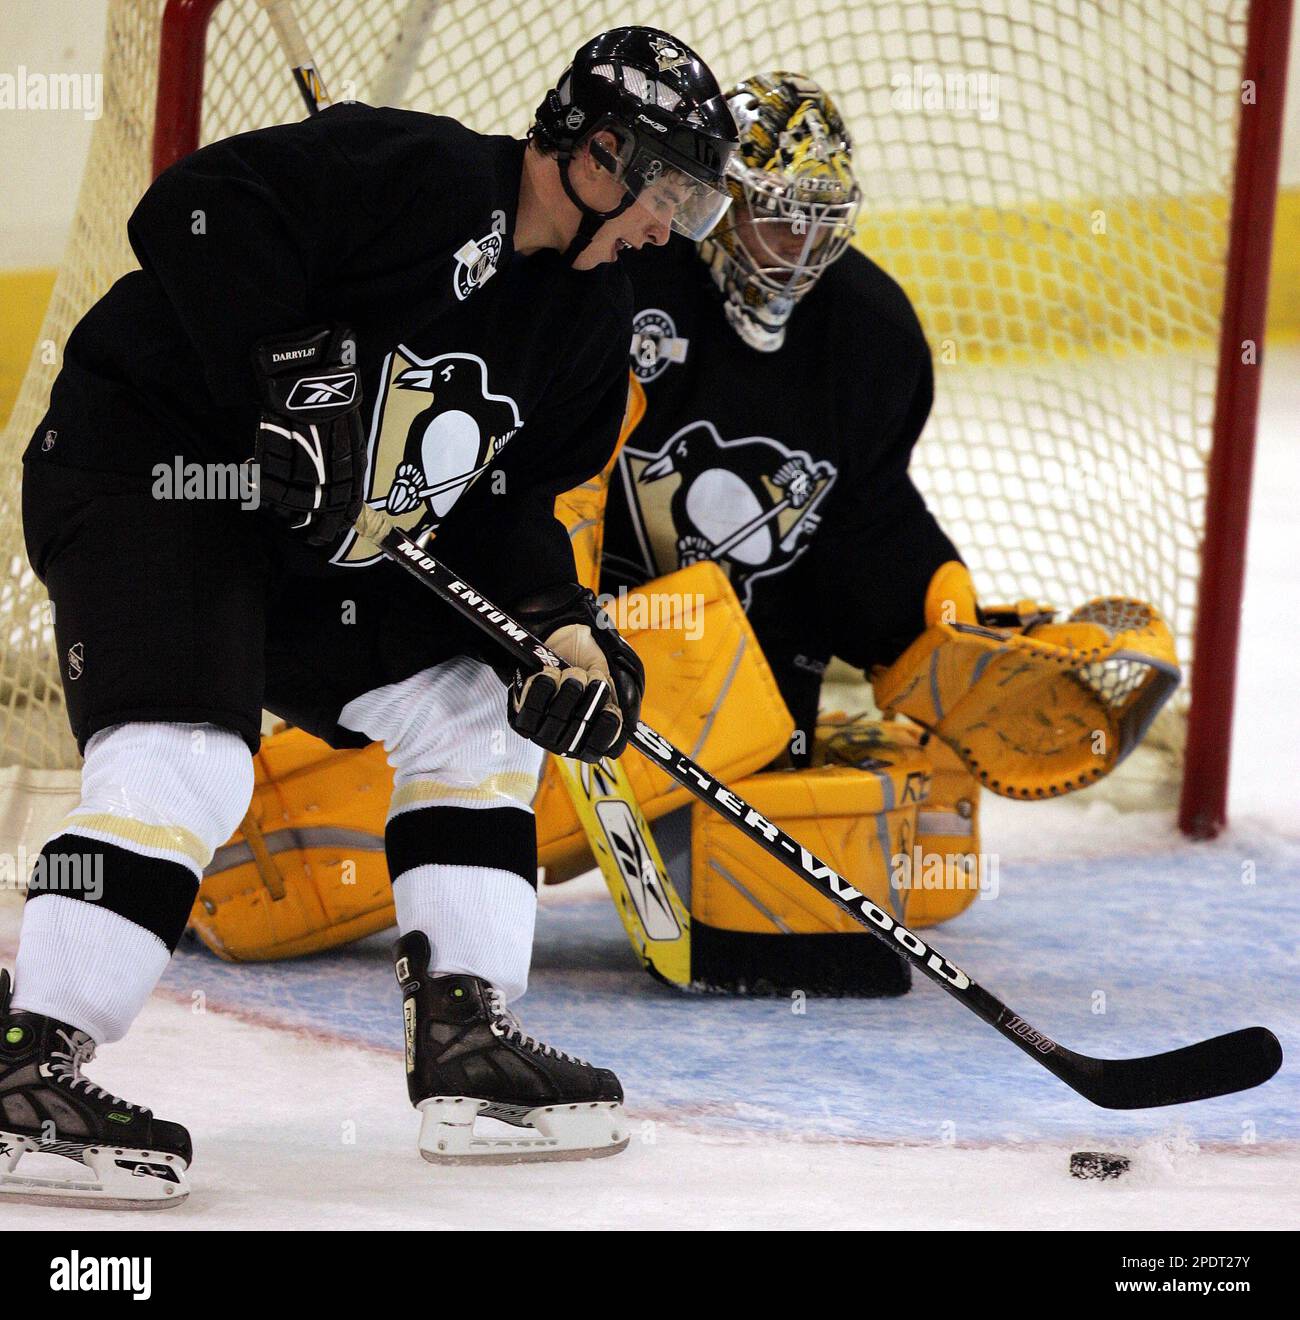 Sidney Crosby Wallpaper: Sidney Crosby & Marc-Andre Fleury